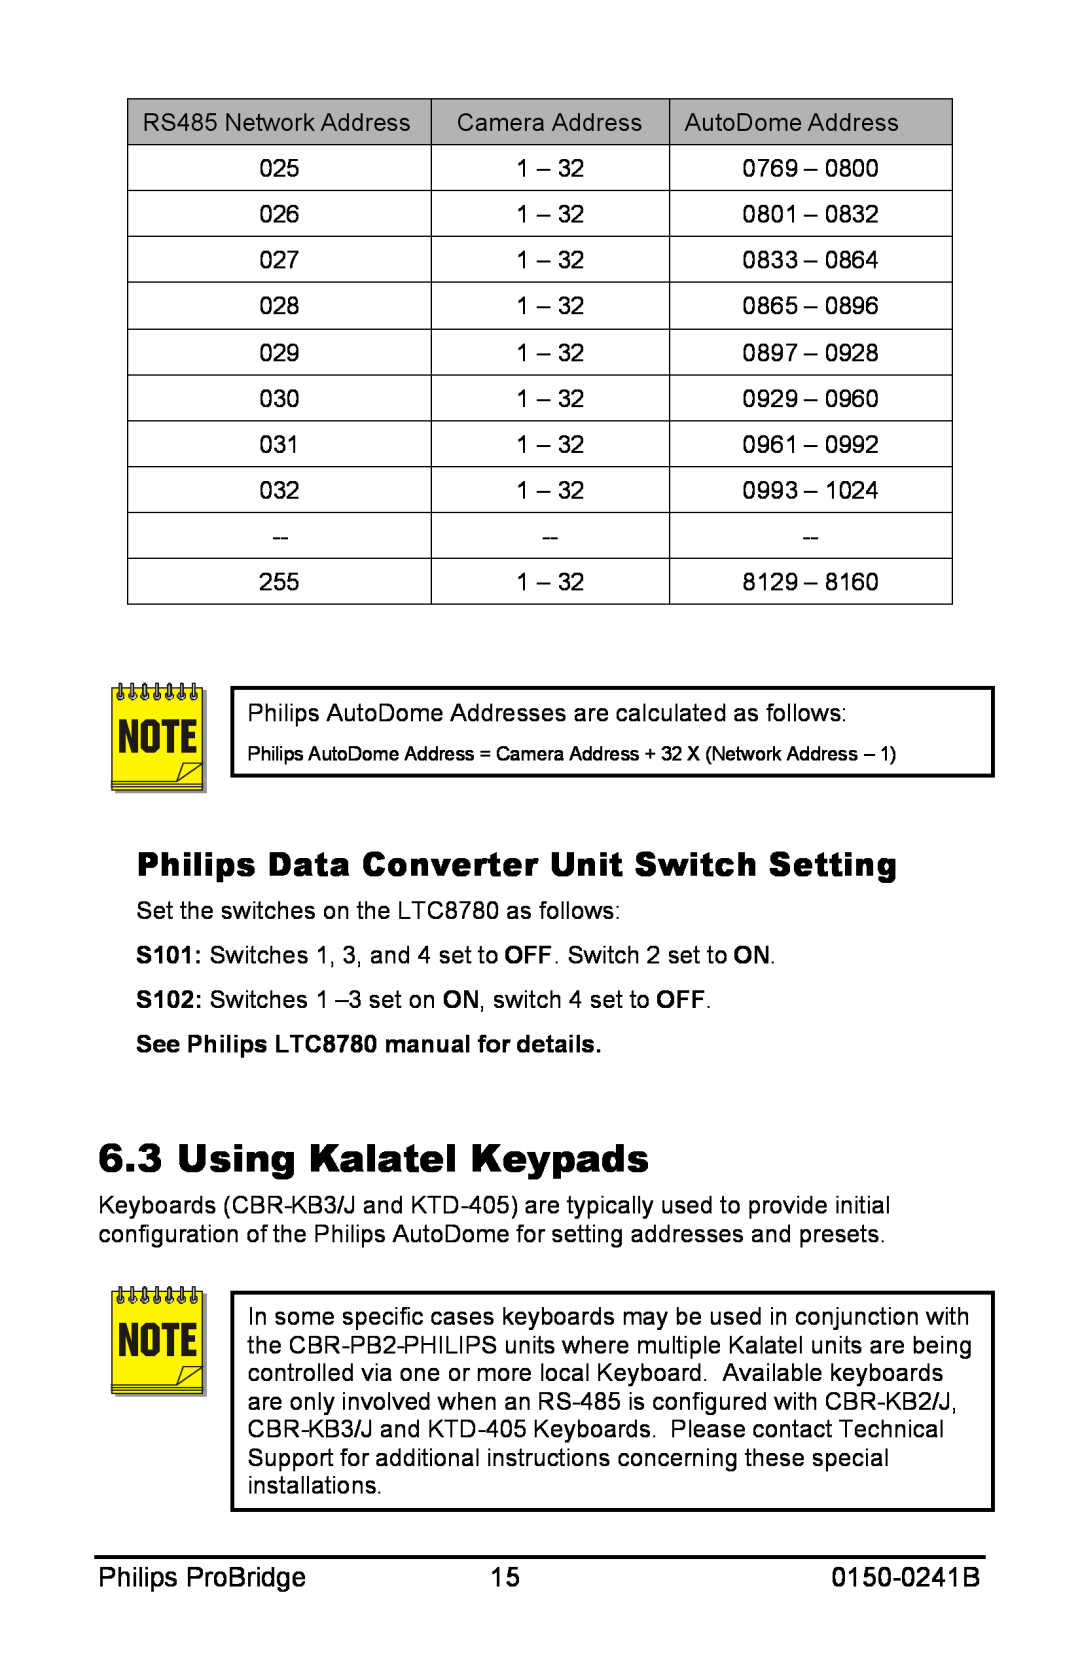 Philips 0150-0241B user manual Using Kalatel Keypads, Philips Data Converter Unit Switch Setting, Philips ProBridge 